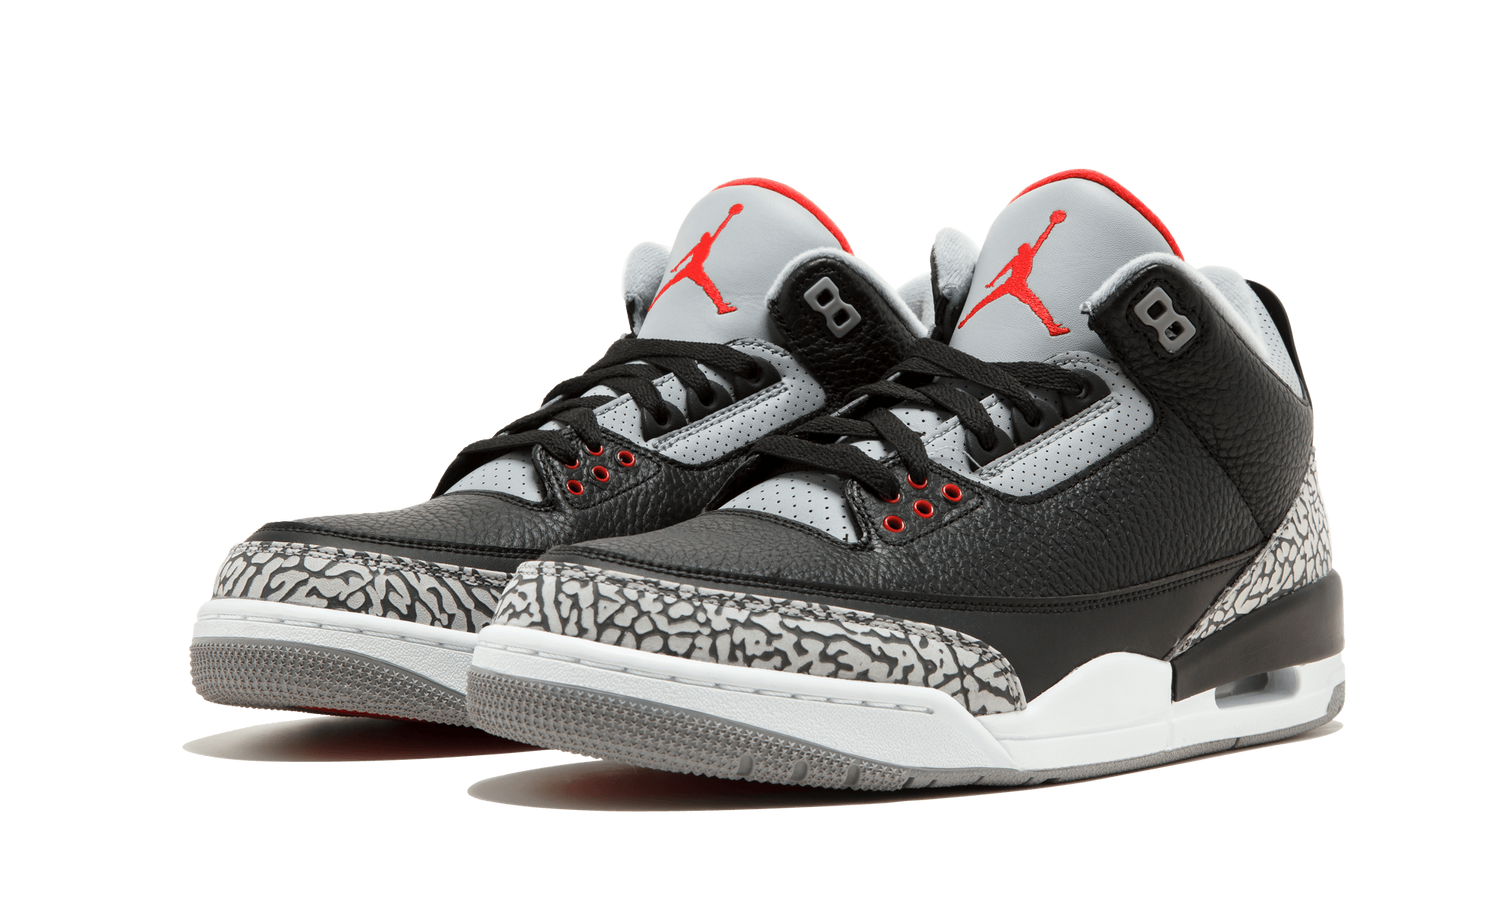 Air Jordan 3 Retro OG “Black/Cement” - 854262 001 | Grailshop